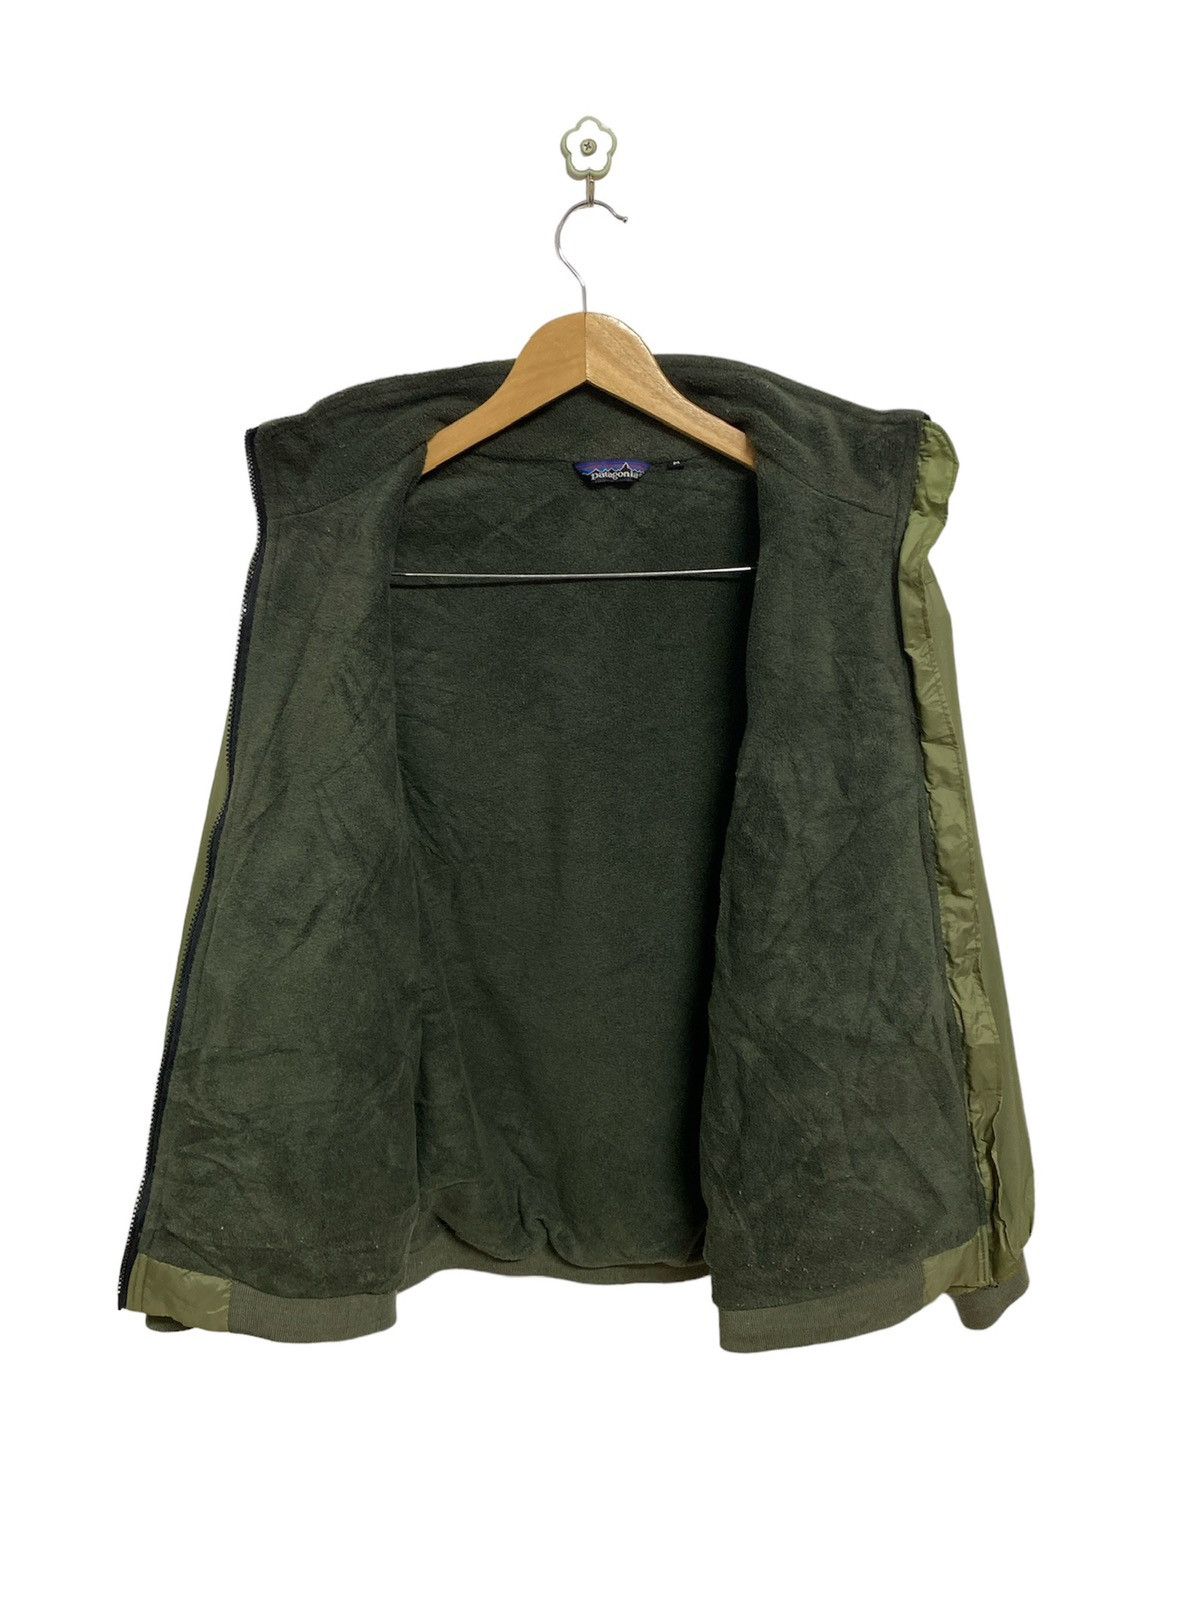 Vintage Patagonia Fleece Lined Zip Up Jacket - 7